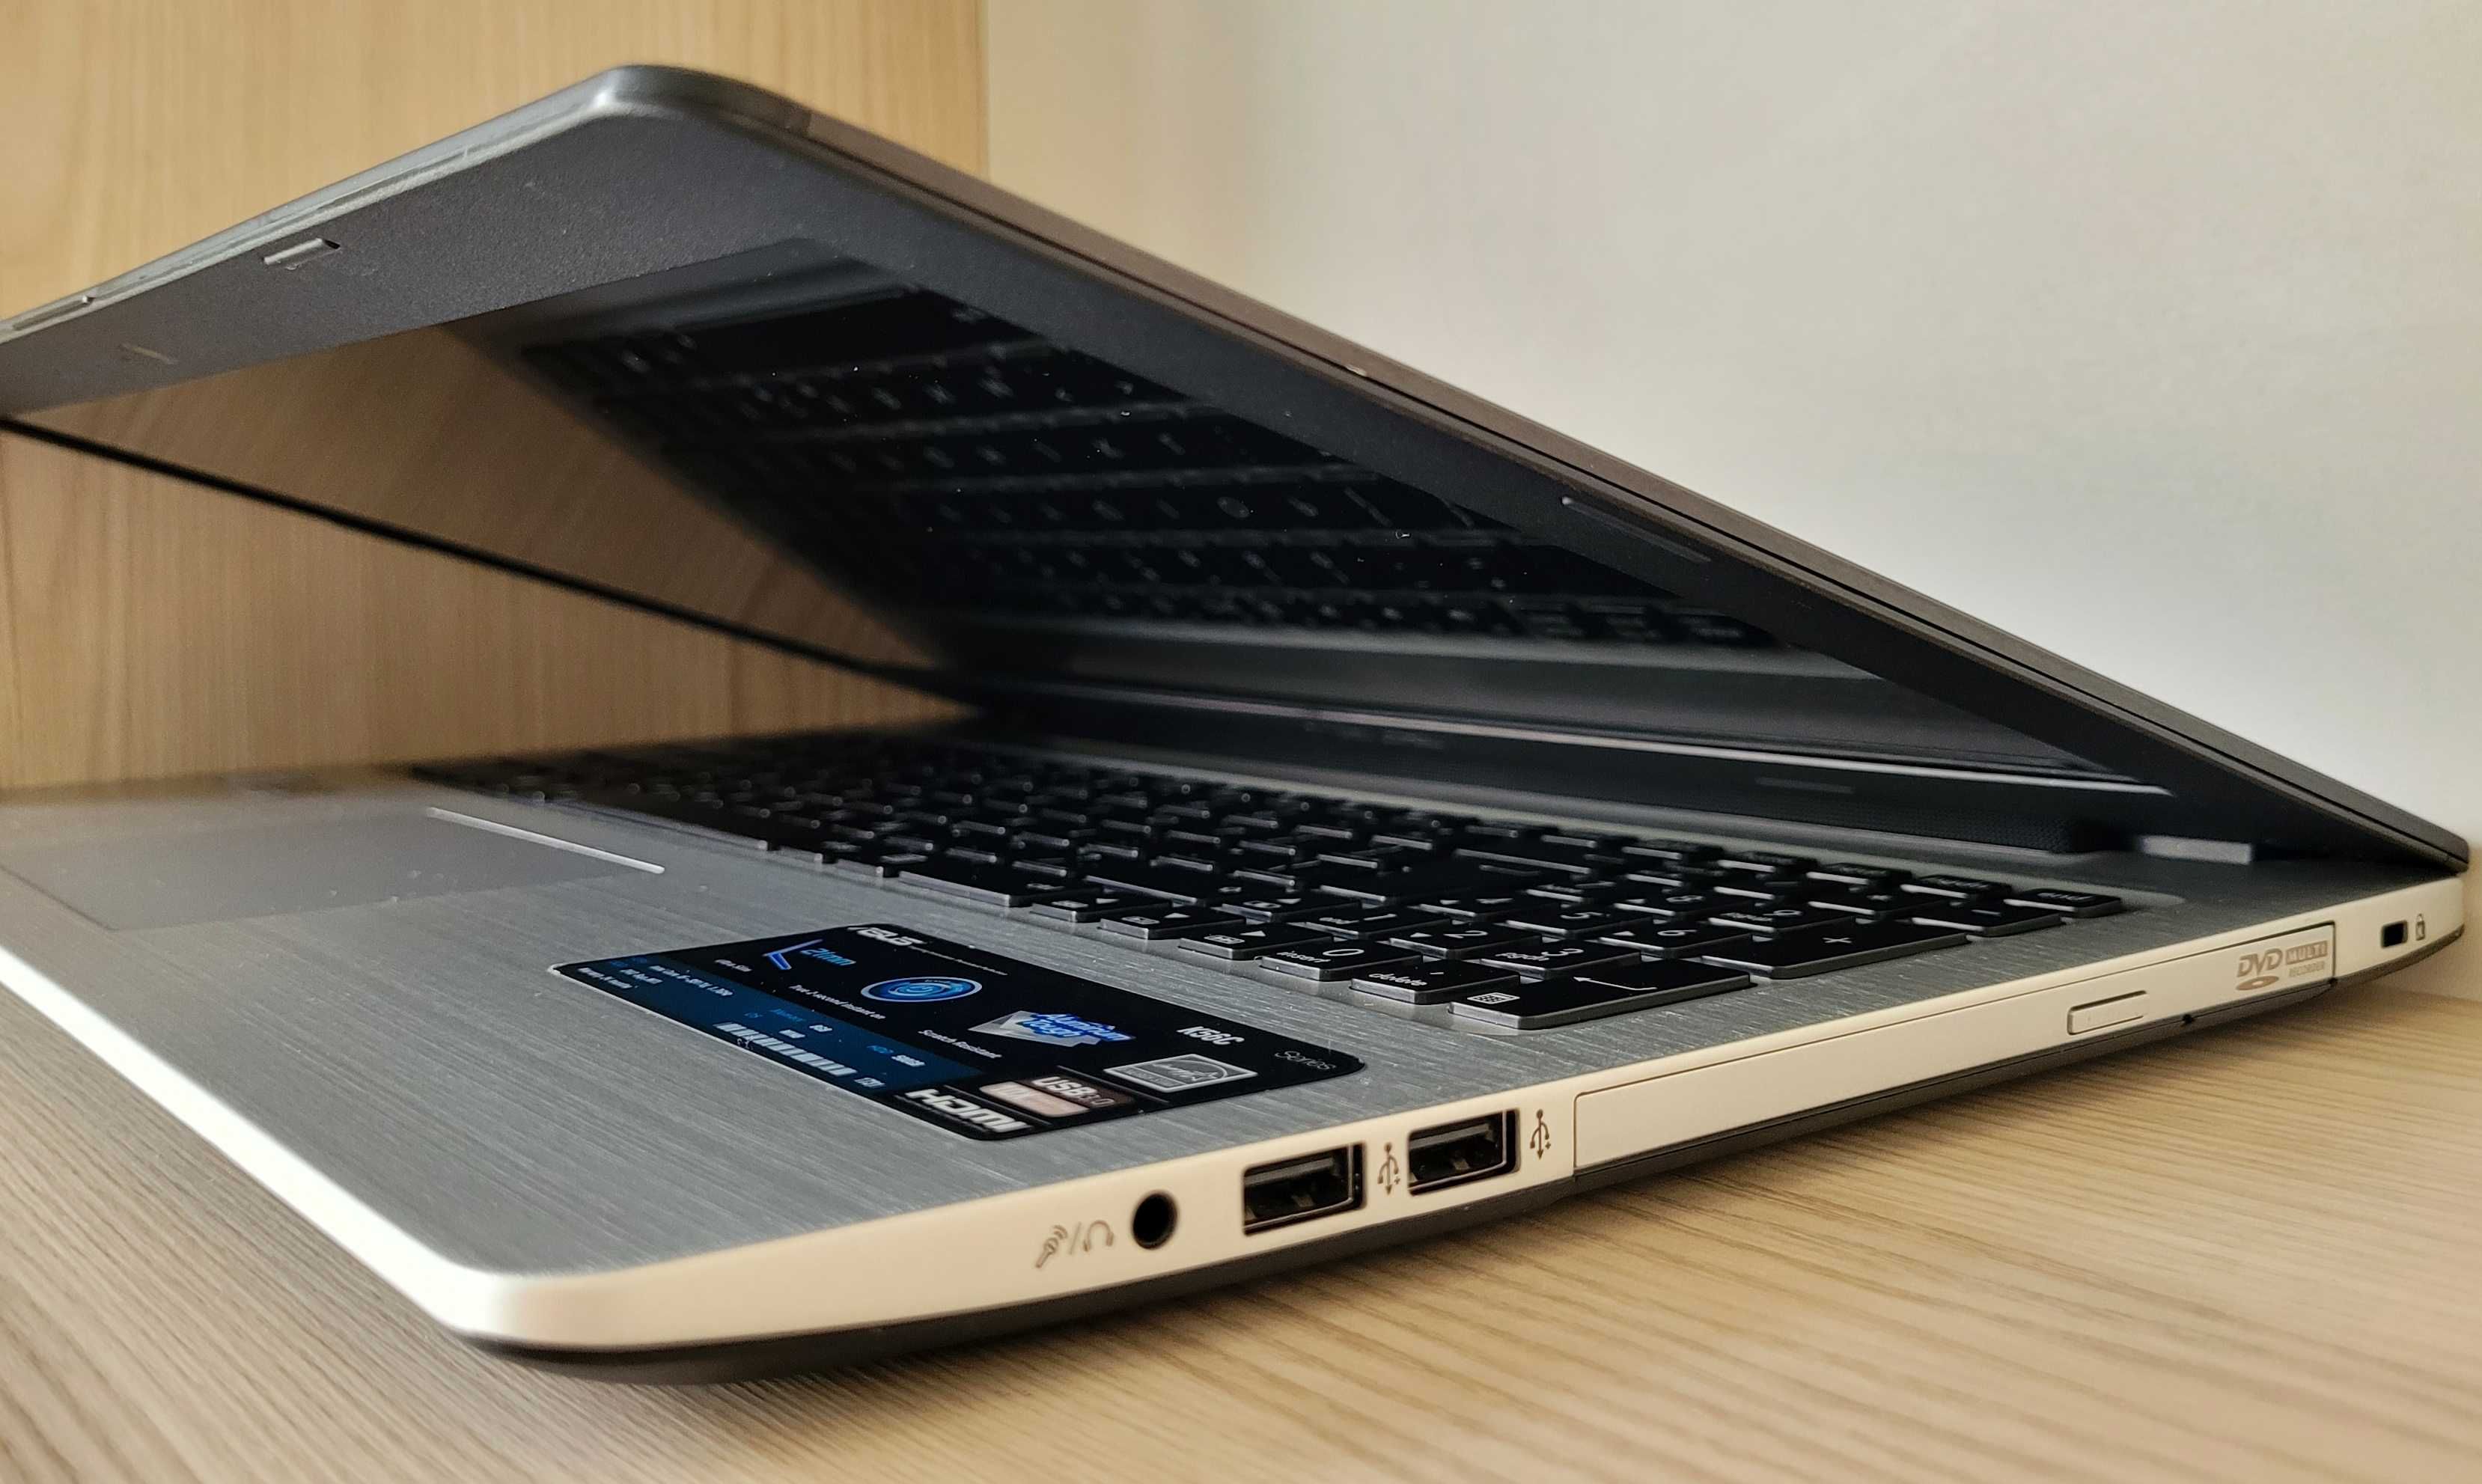 Laptop Asus K56C - Intel Core i5/8GB RAM/128GB SSD/NVIDIA GeForce GT